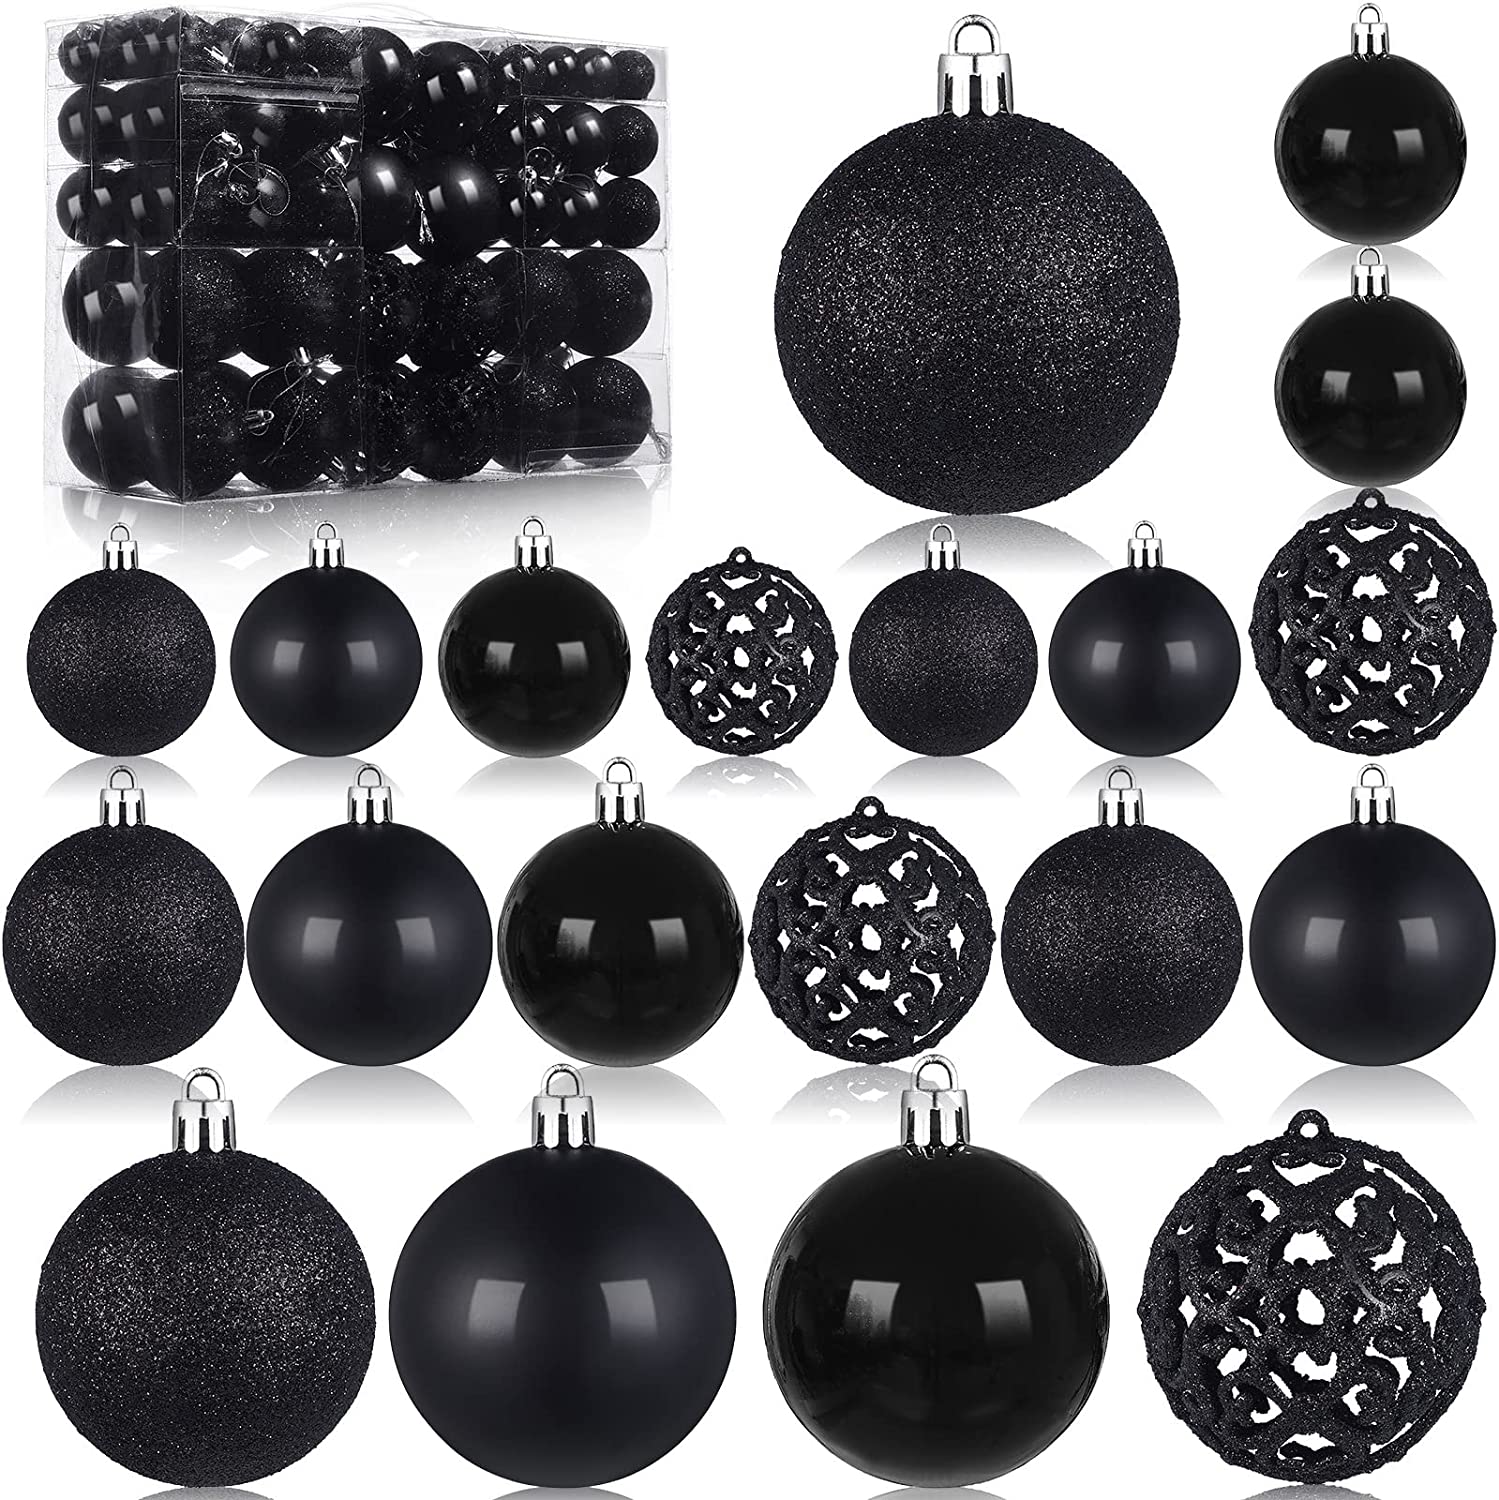 100 Pcs Black Christmas Ball Ornaments Christmas Tree Decoration Hanging Balls Glitter Christmas Ornaments for Christmas Tree Wedding Party Holiday Decor, Black, 2.36 Inch 1.57 Inch 1.18 Inch